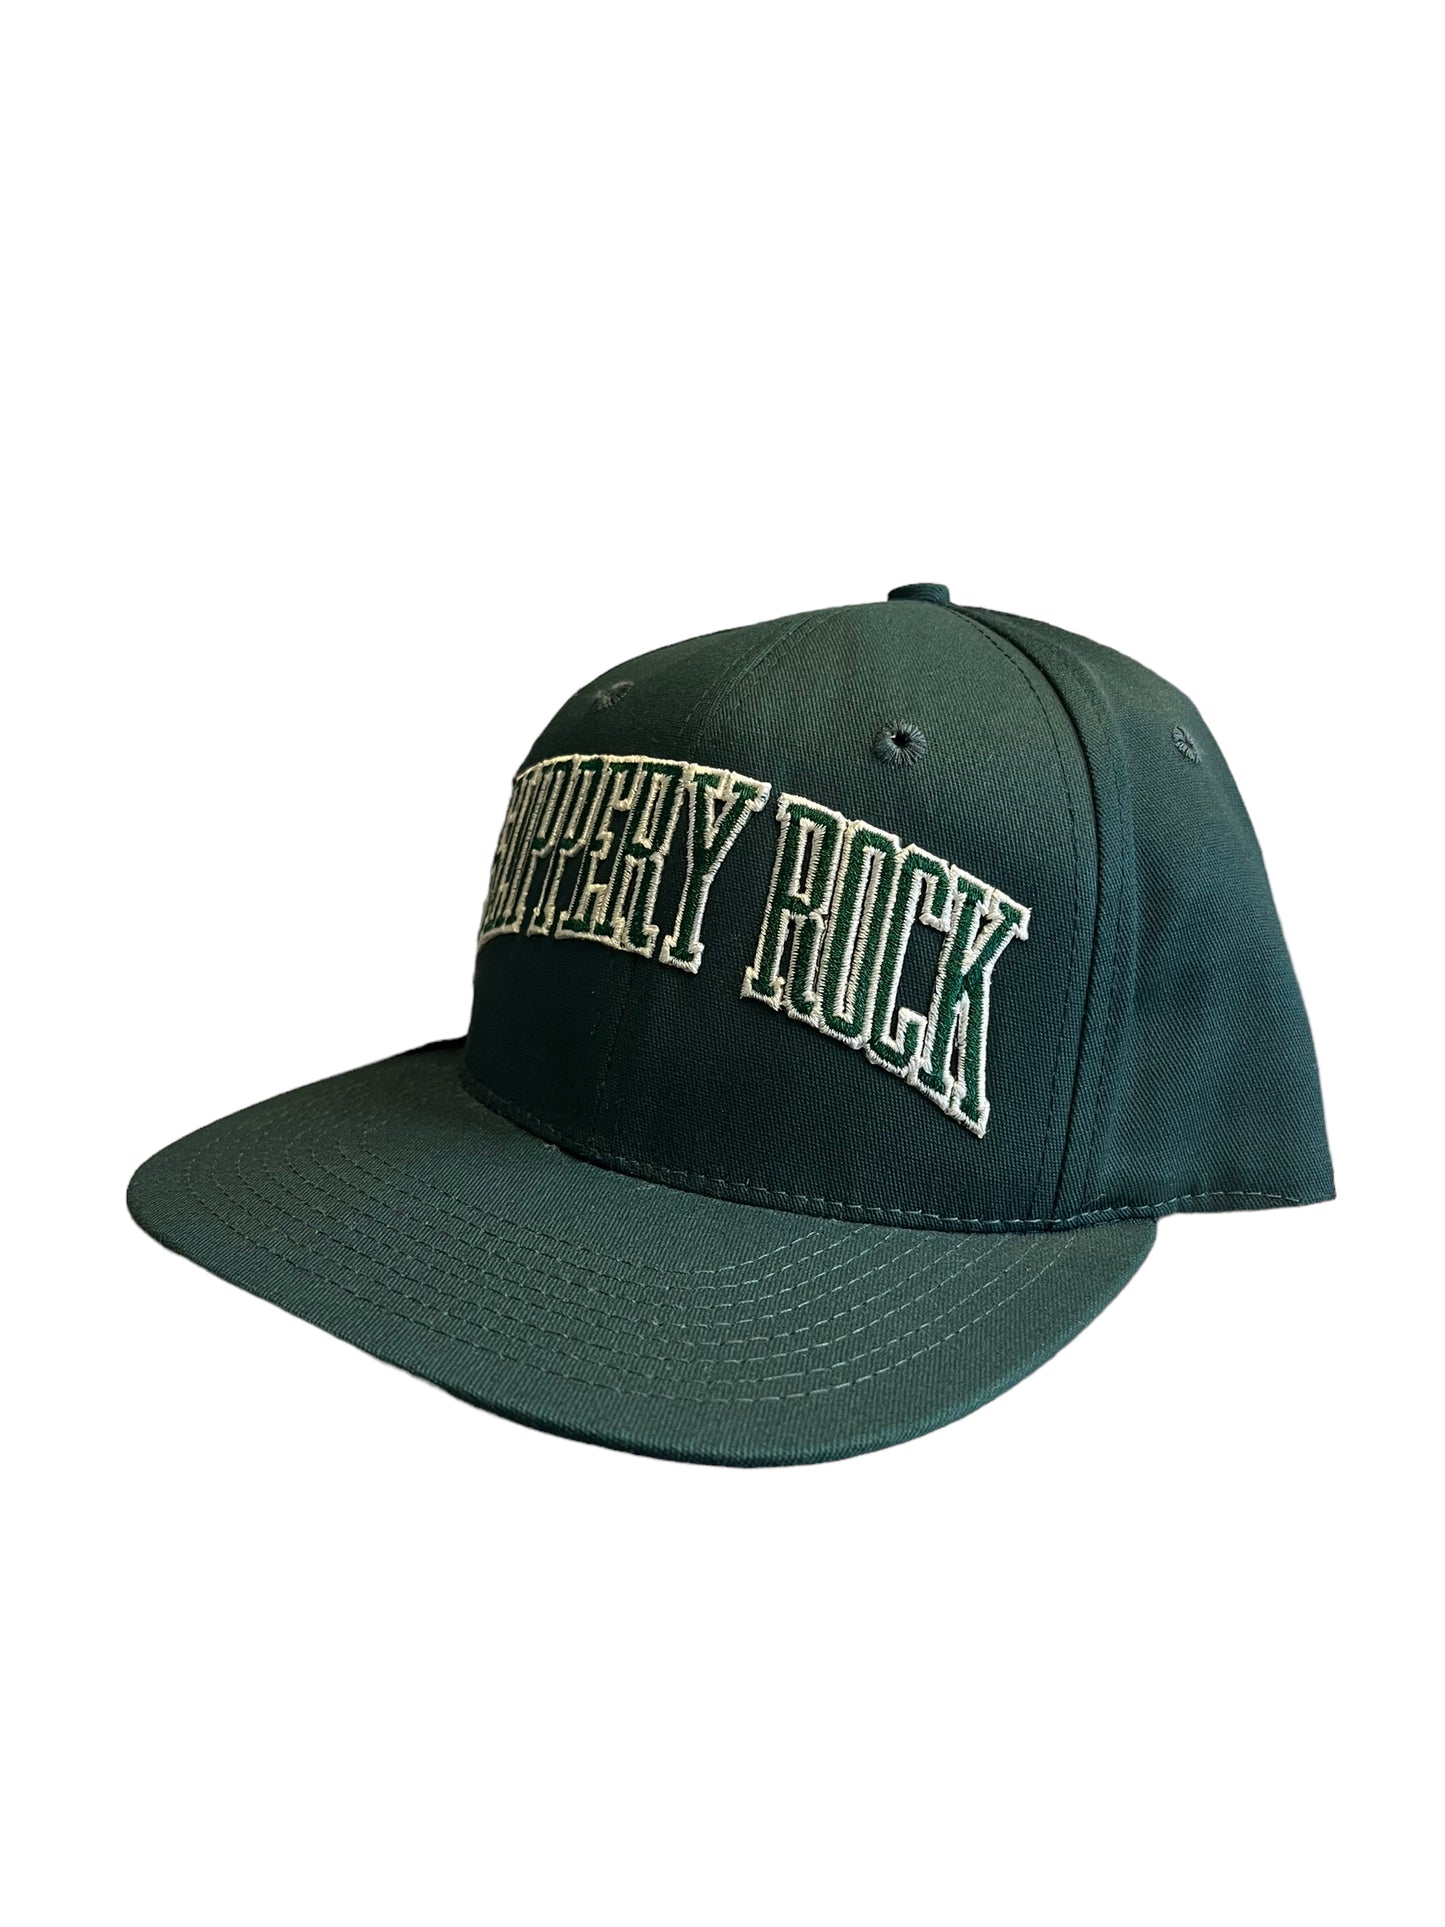 Vintage Slippery Rock Snapback Hat Brand New